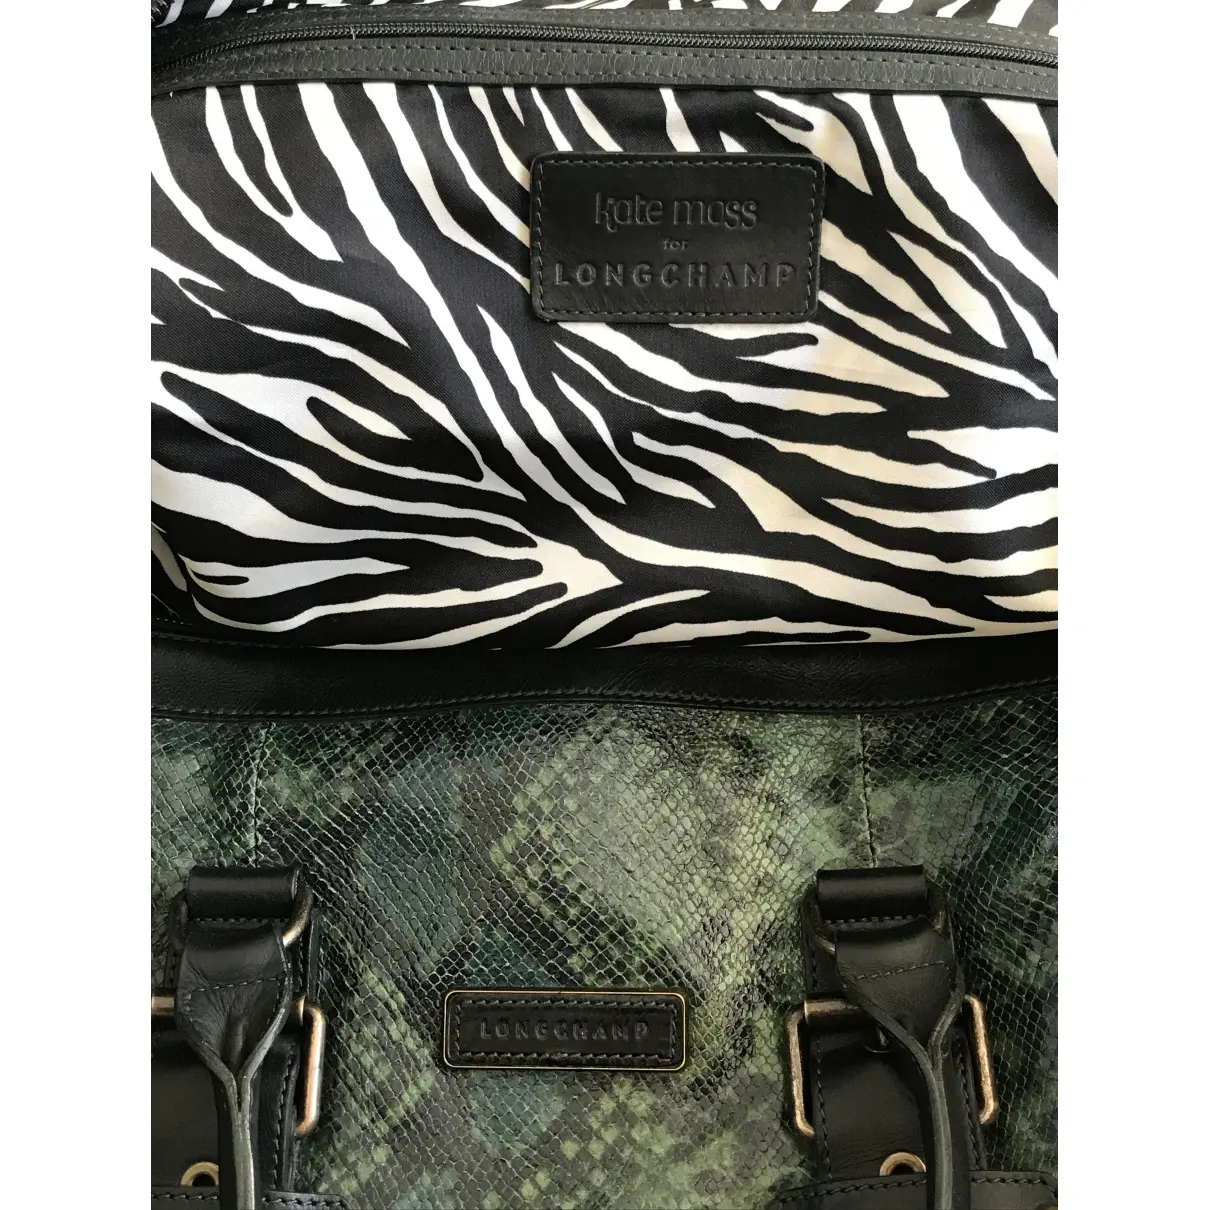 Buy Longchamp Kate Moss python 48h bag online